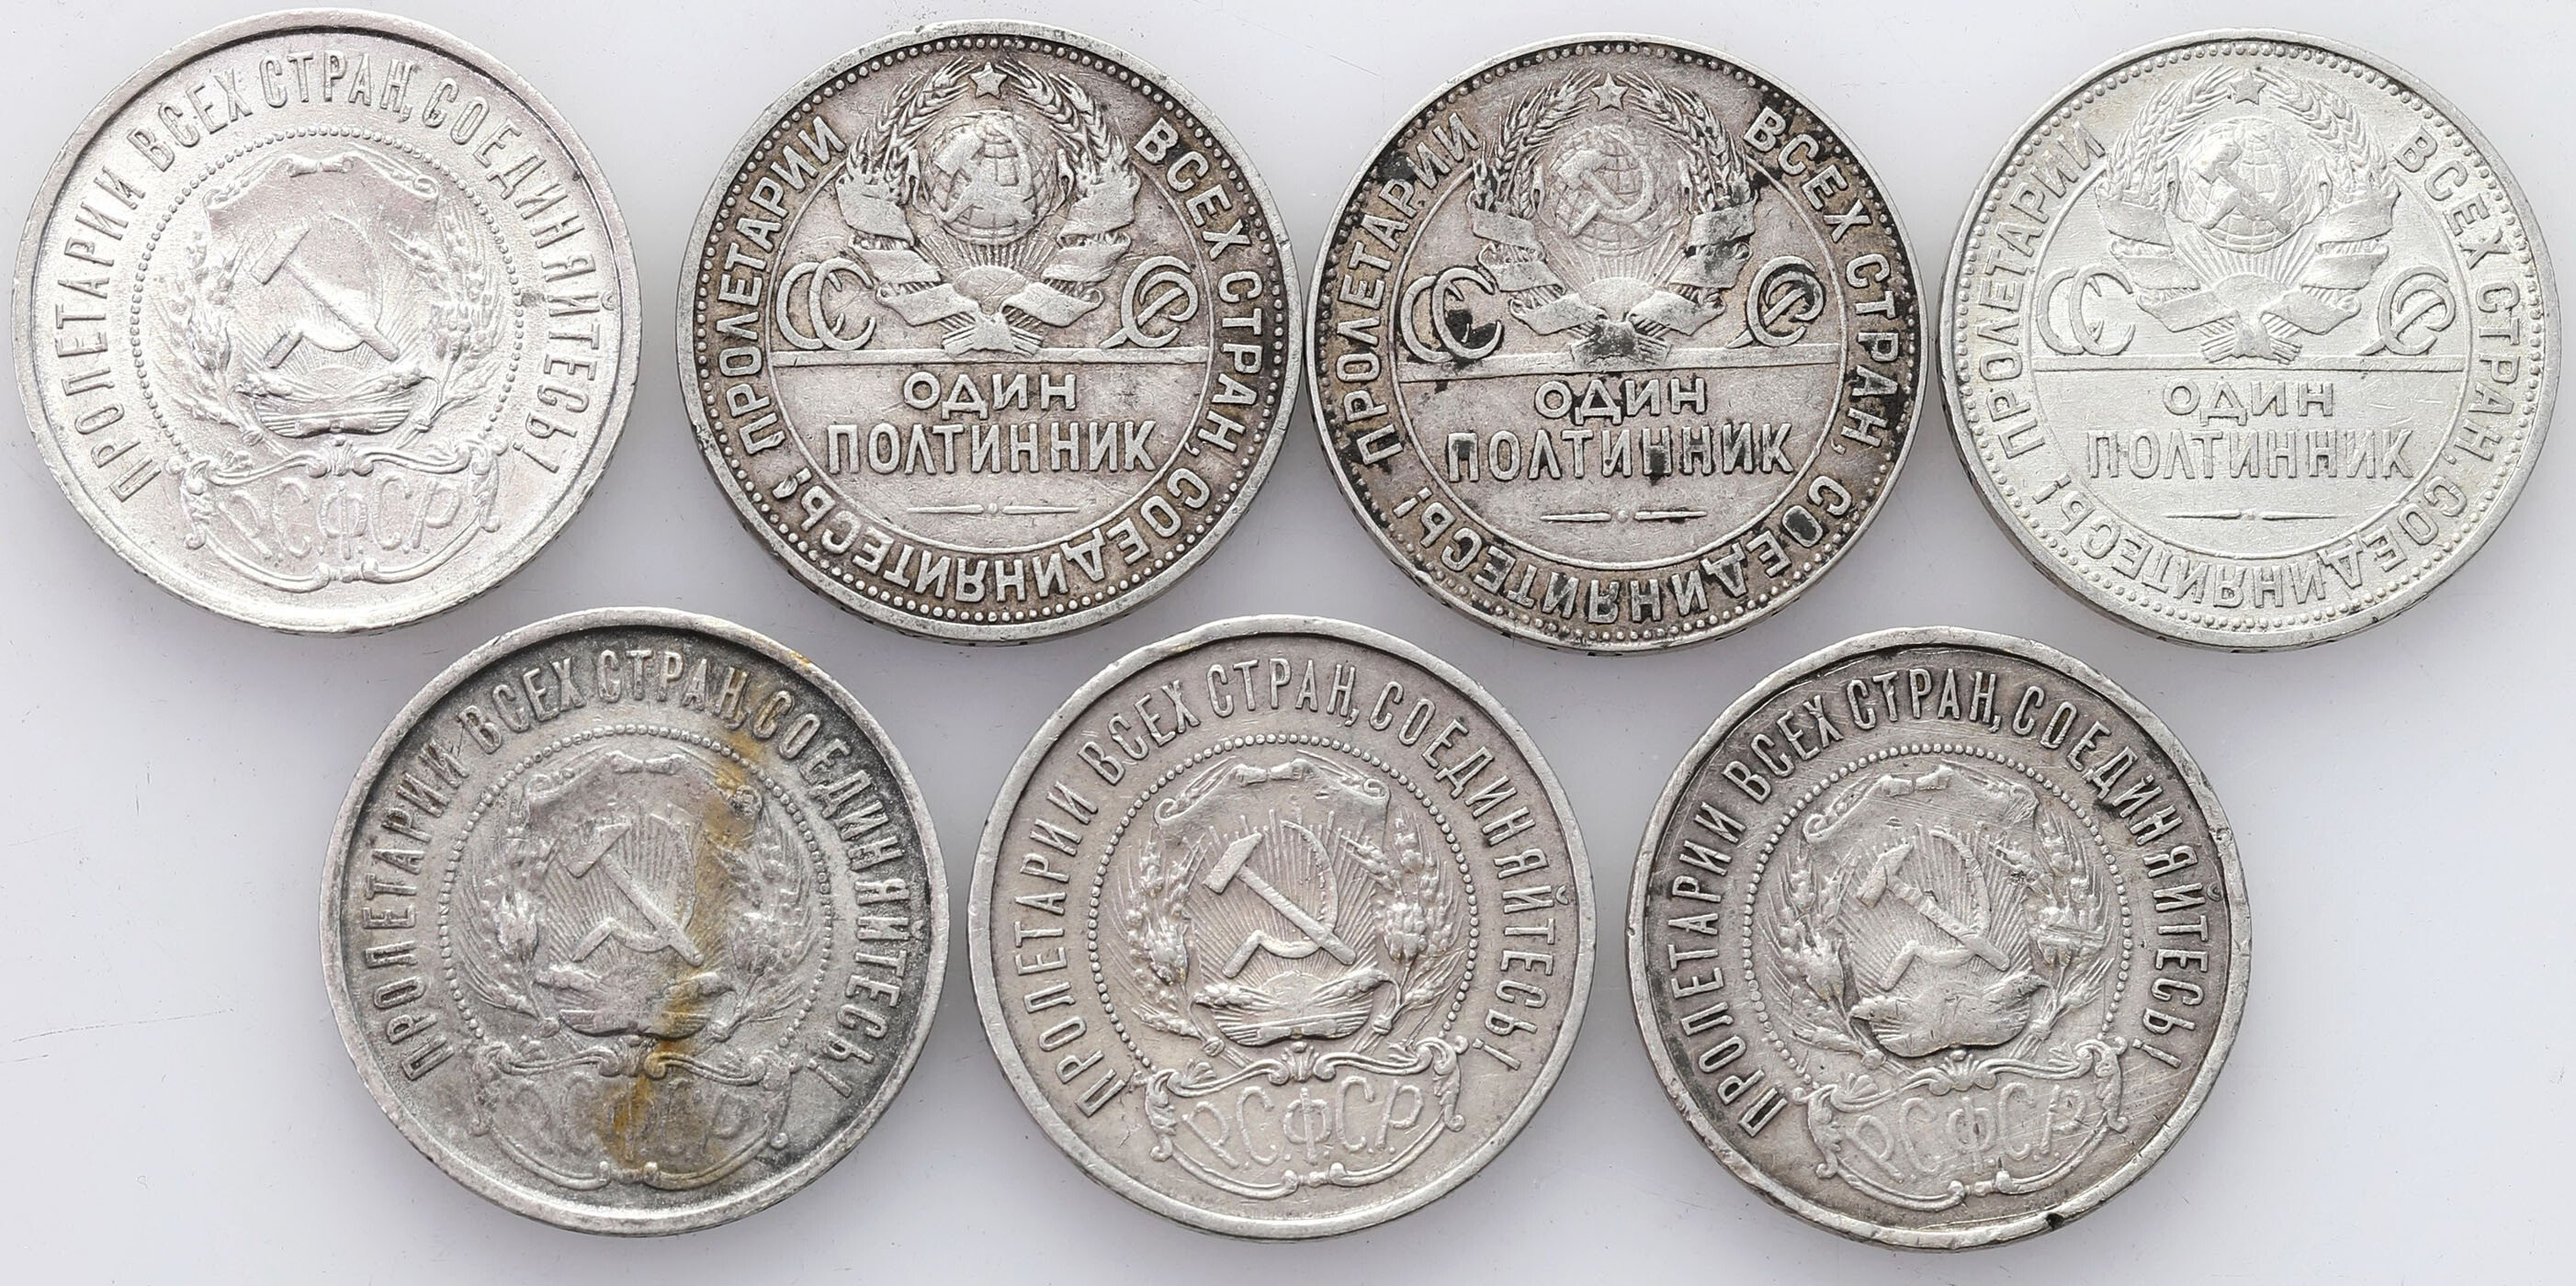 Rosja, ZSSR. Połtinnik (50 kopiejek) 1921-1925, zestaw 7 monet